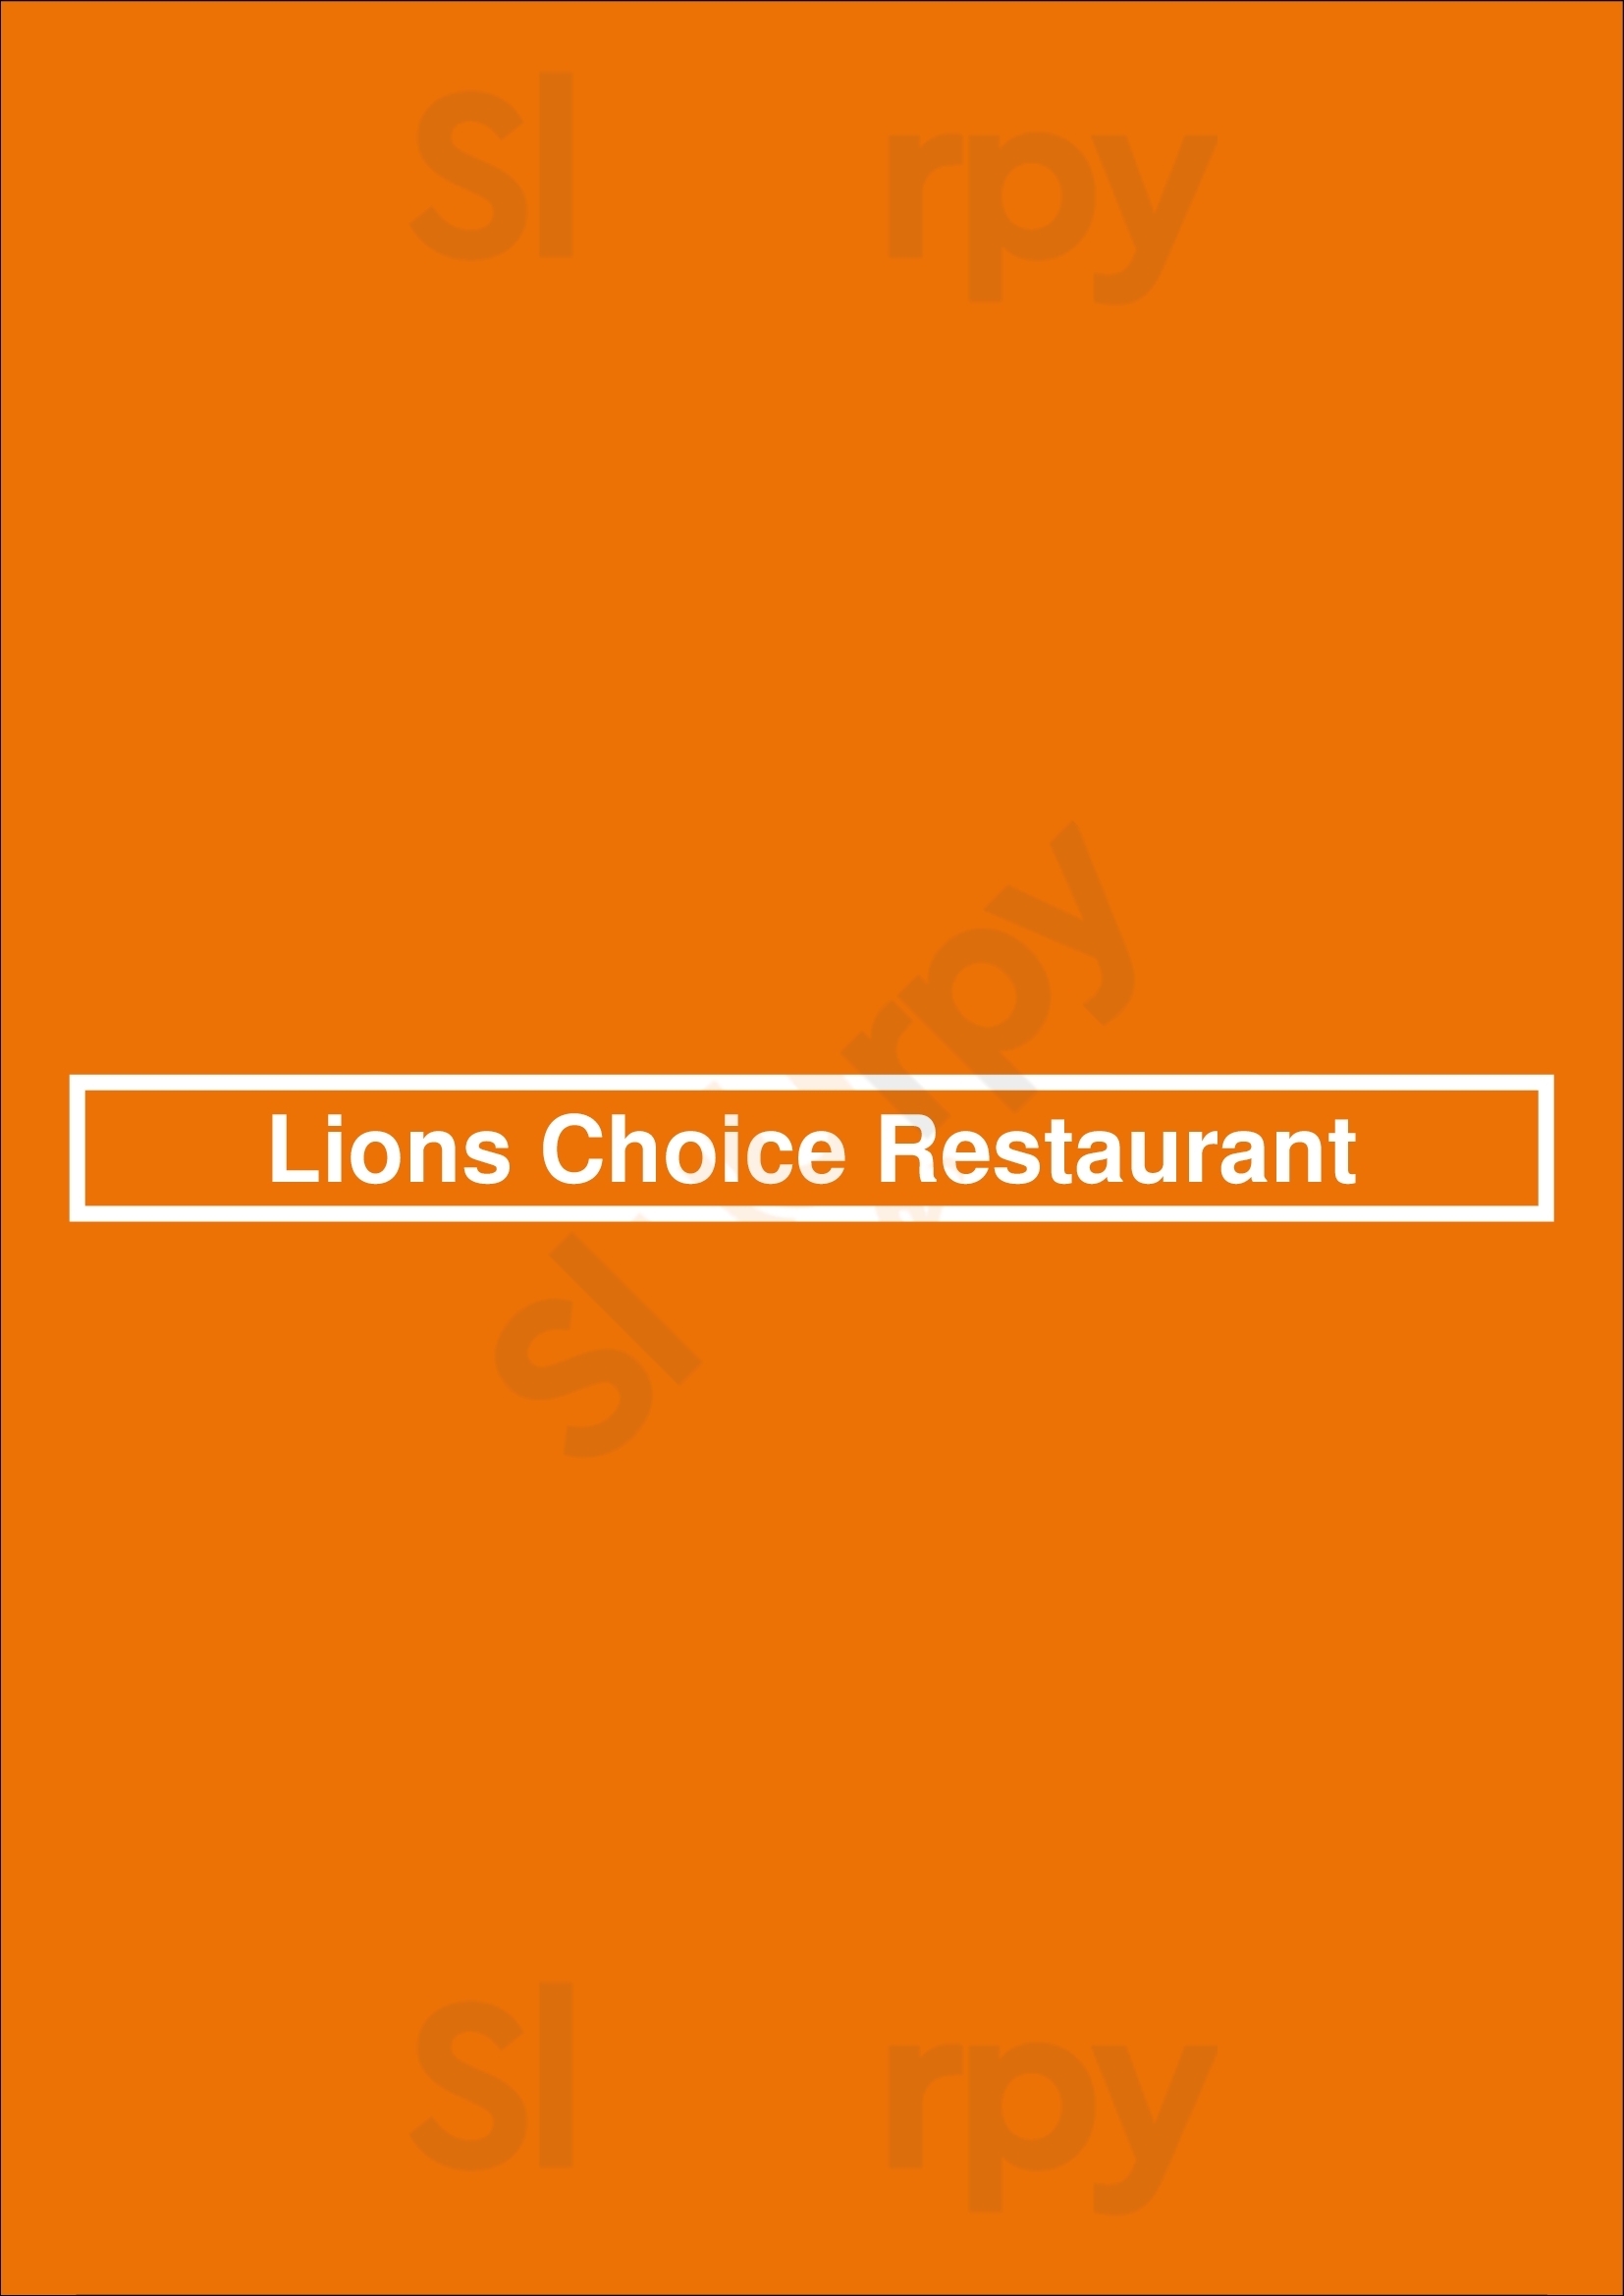 Lions Choice Restaurant Chesterfield Menu - 1